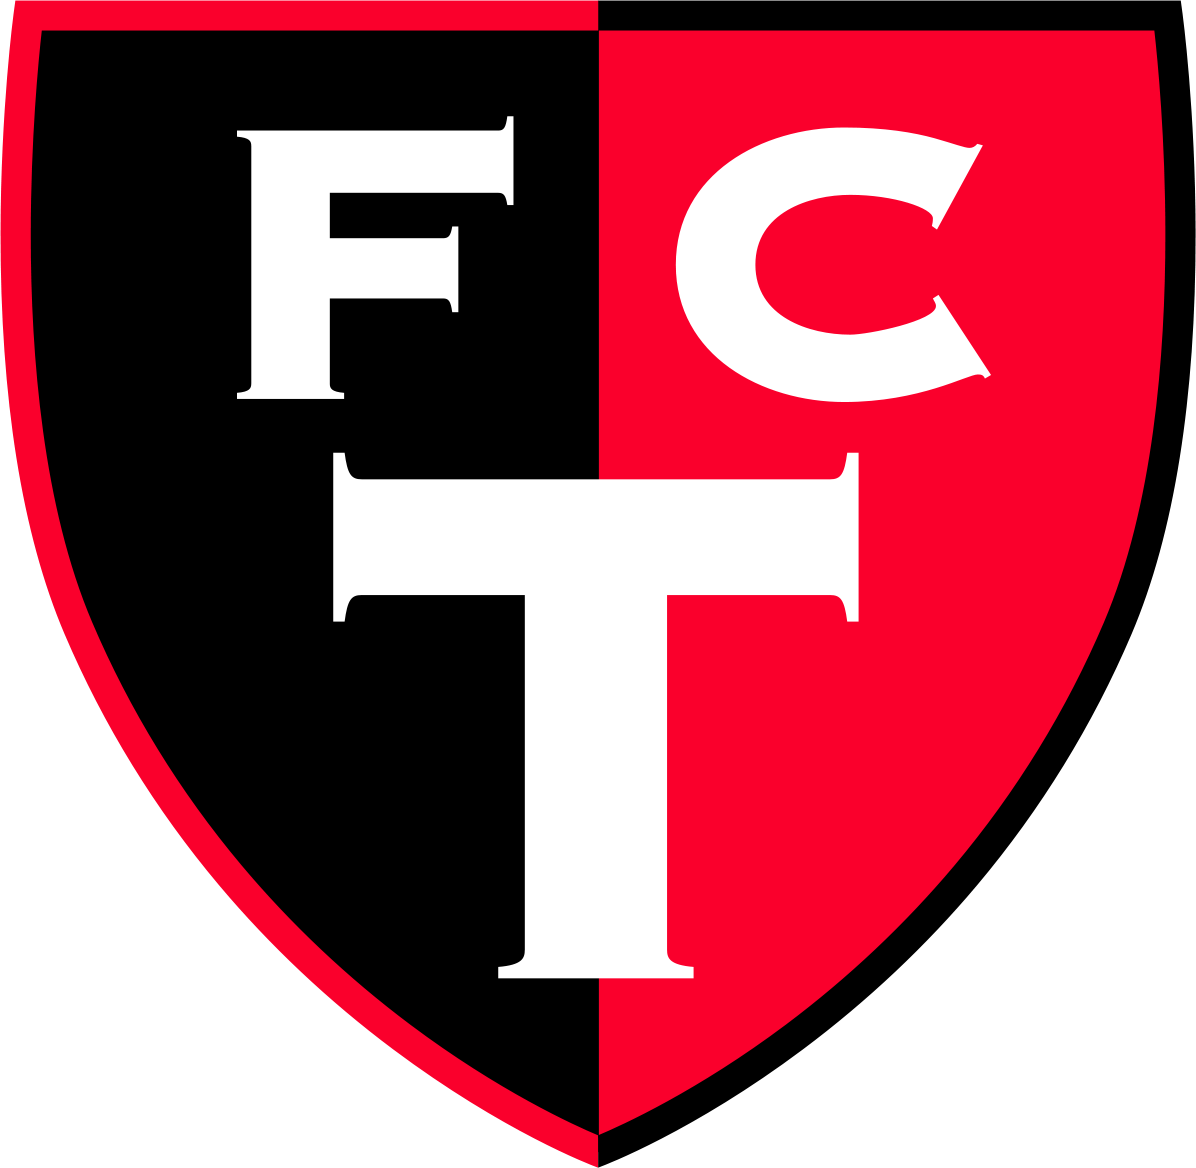 FC Trollhättan